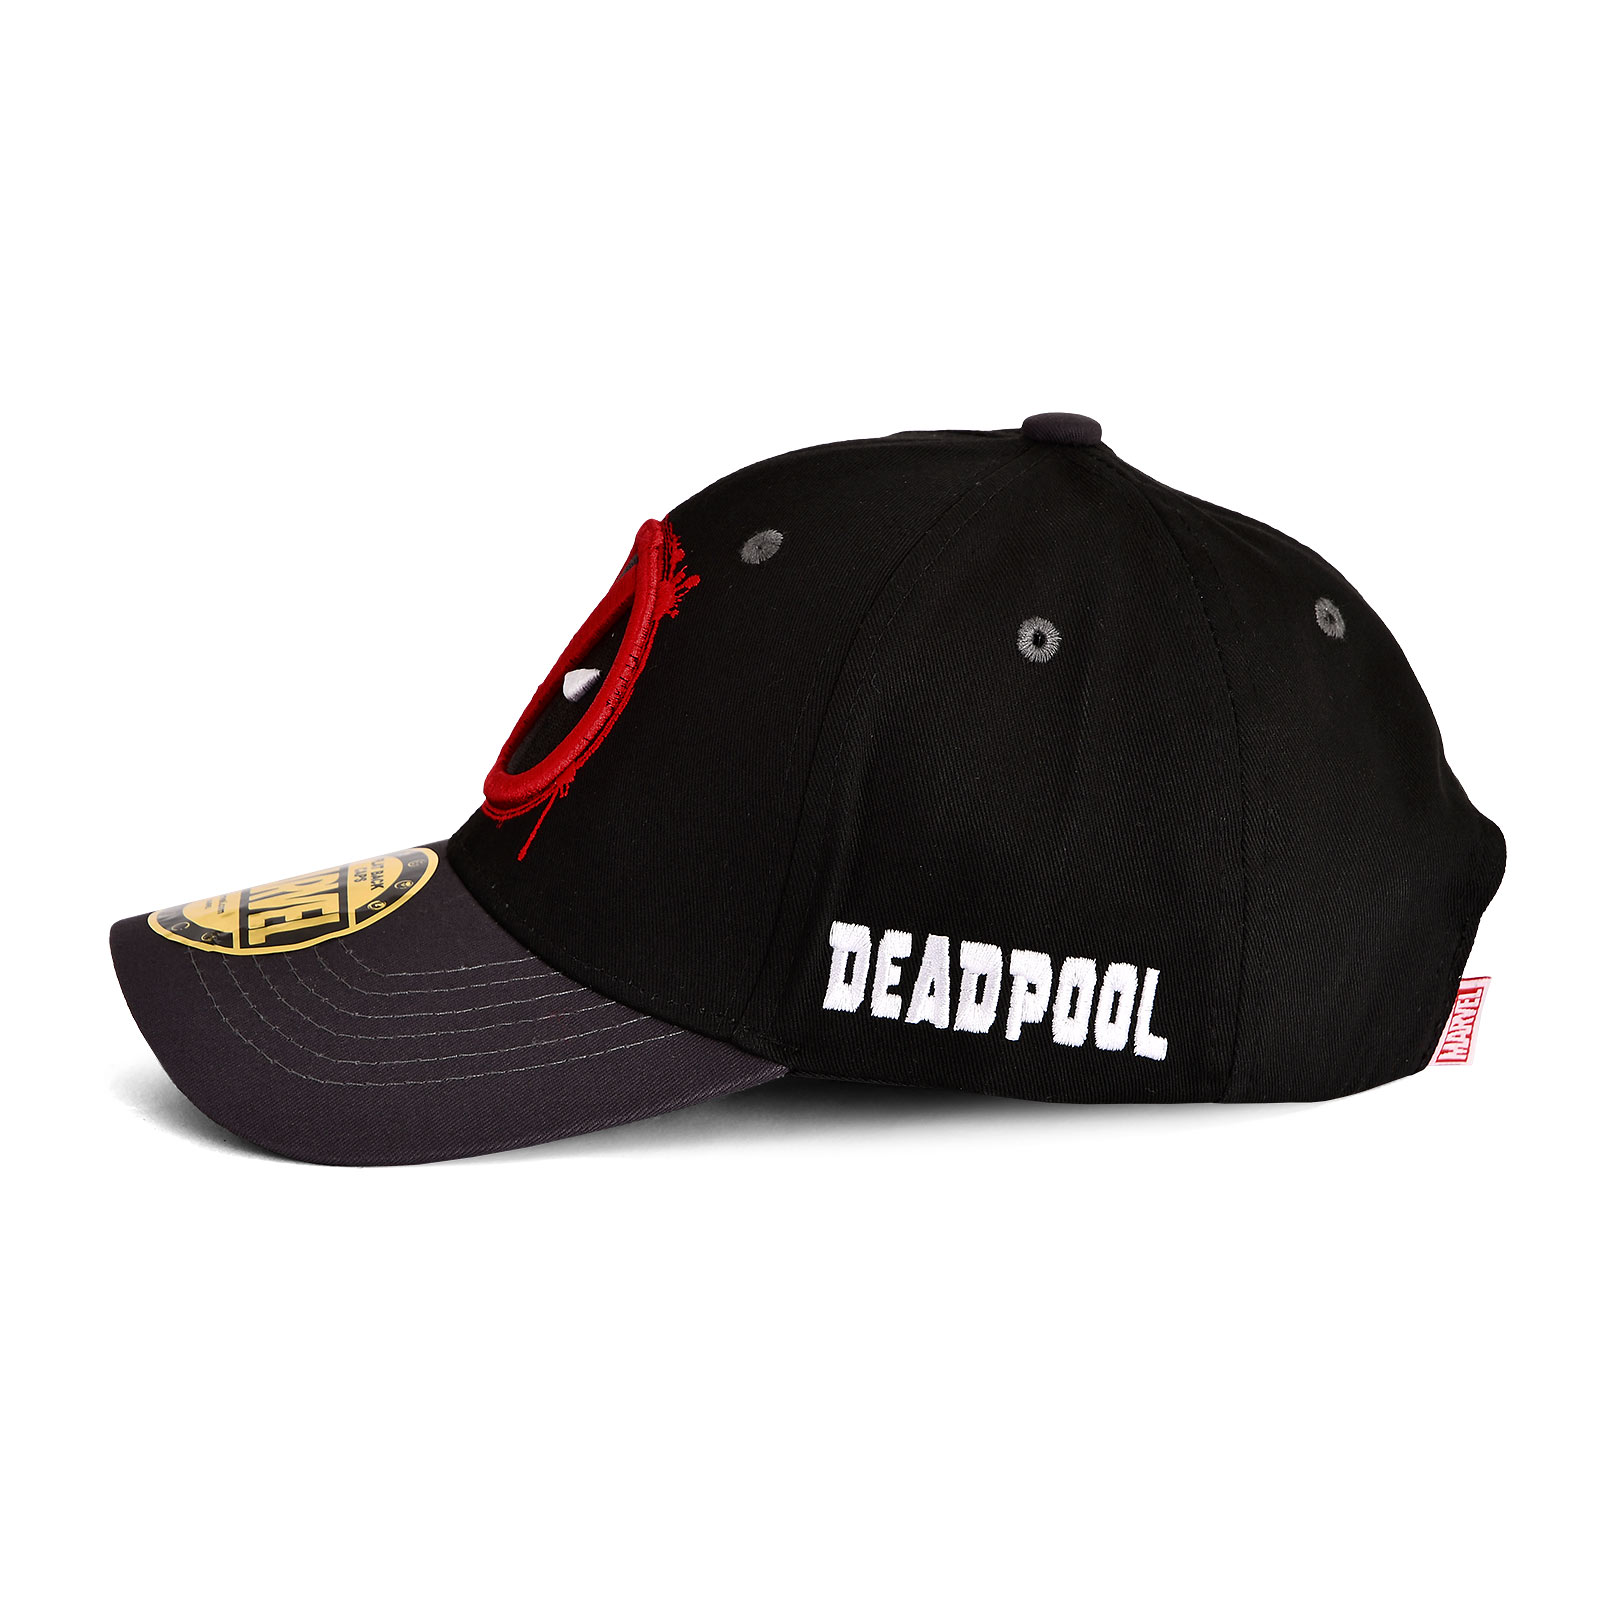 Deadpool - Keep Out Baseball Cap Black